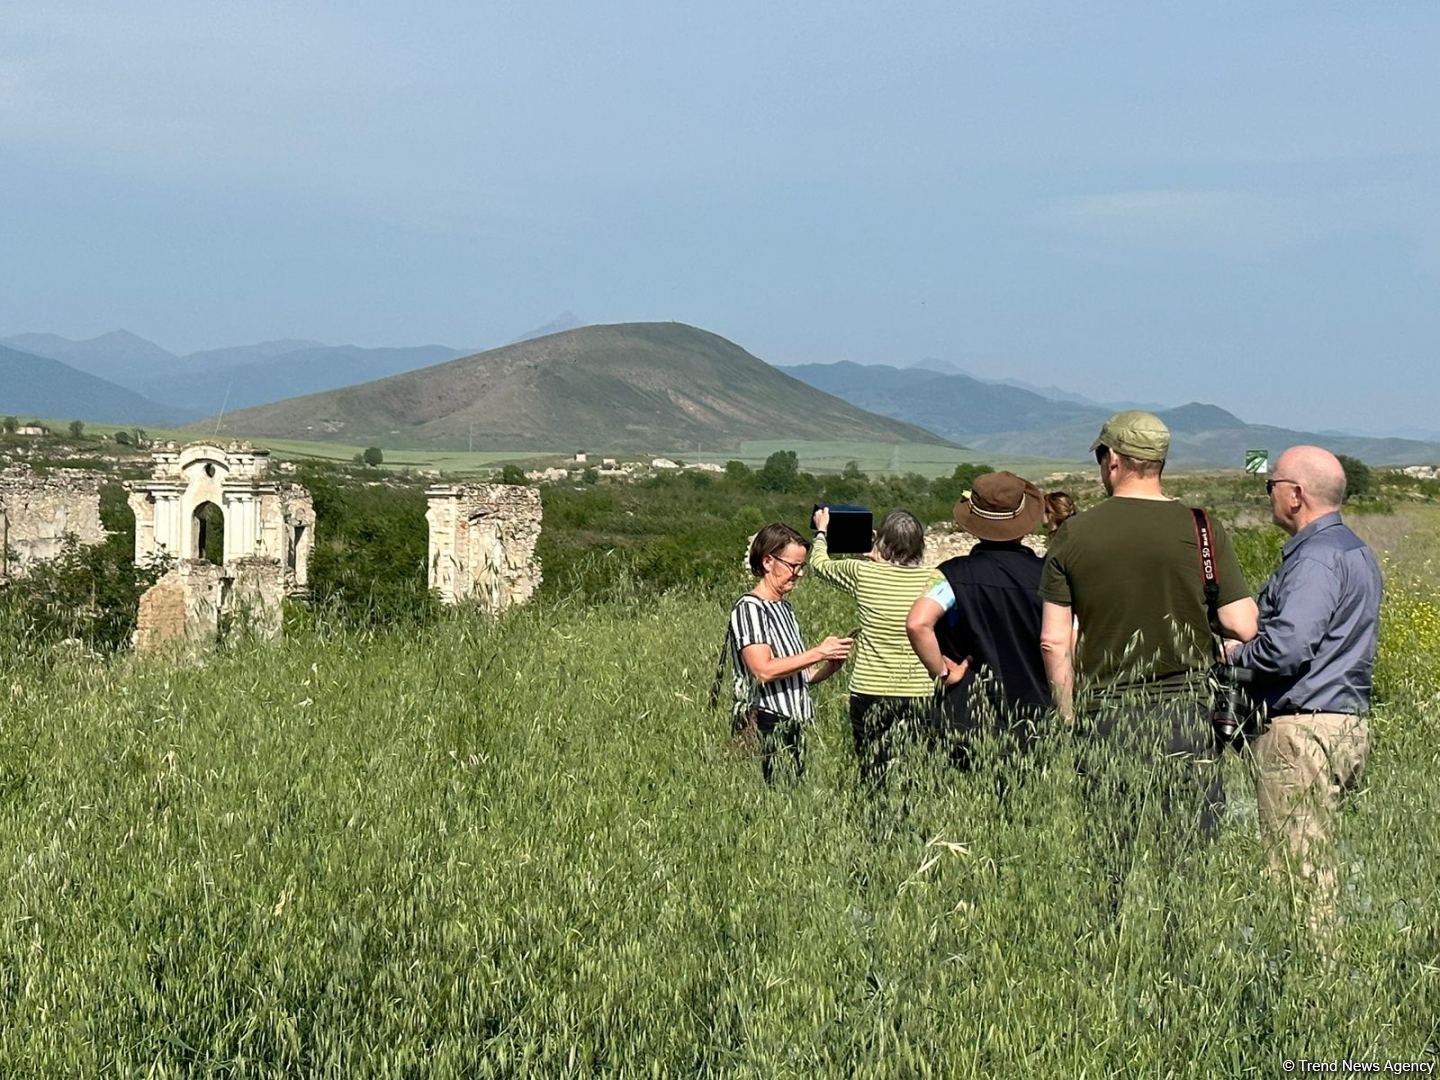 Visit of international travelers to Azerbaijani Karabakh, Eastern Zangazur kicks off (PHOTO)